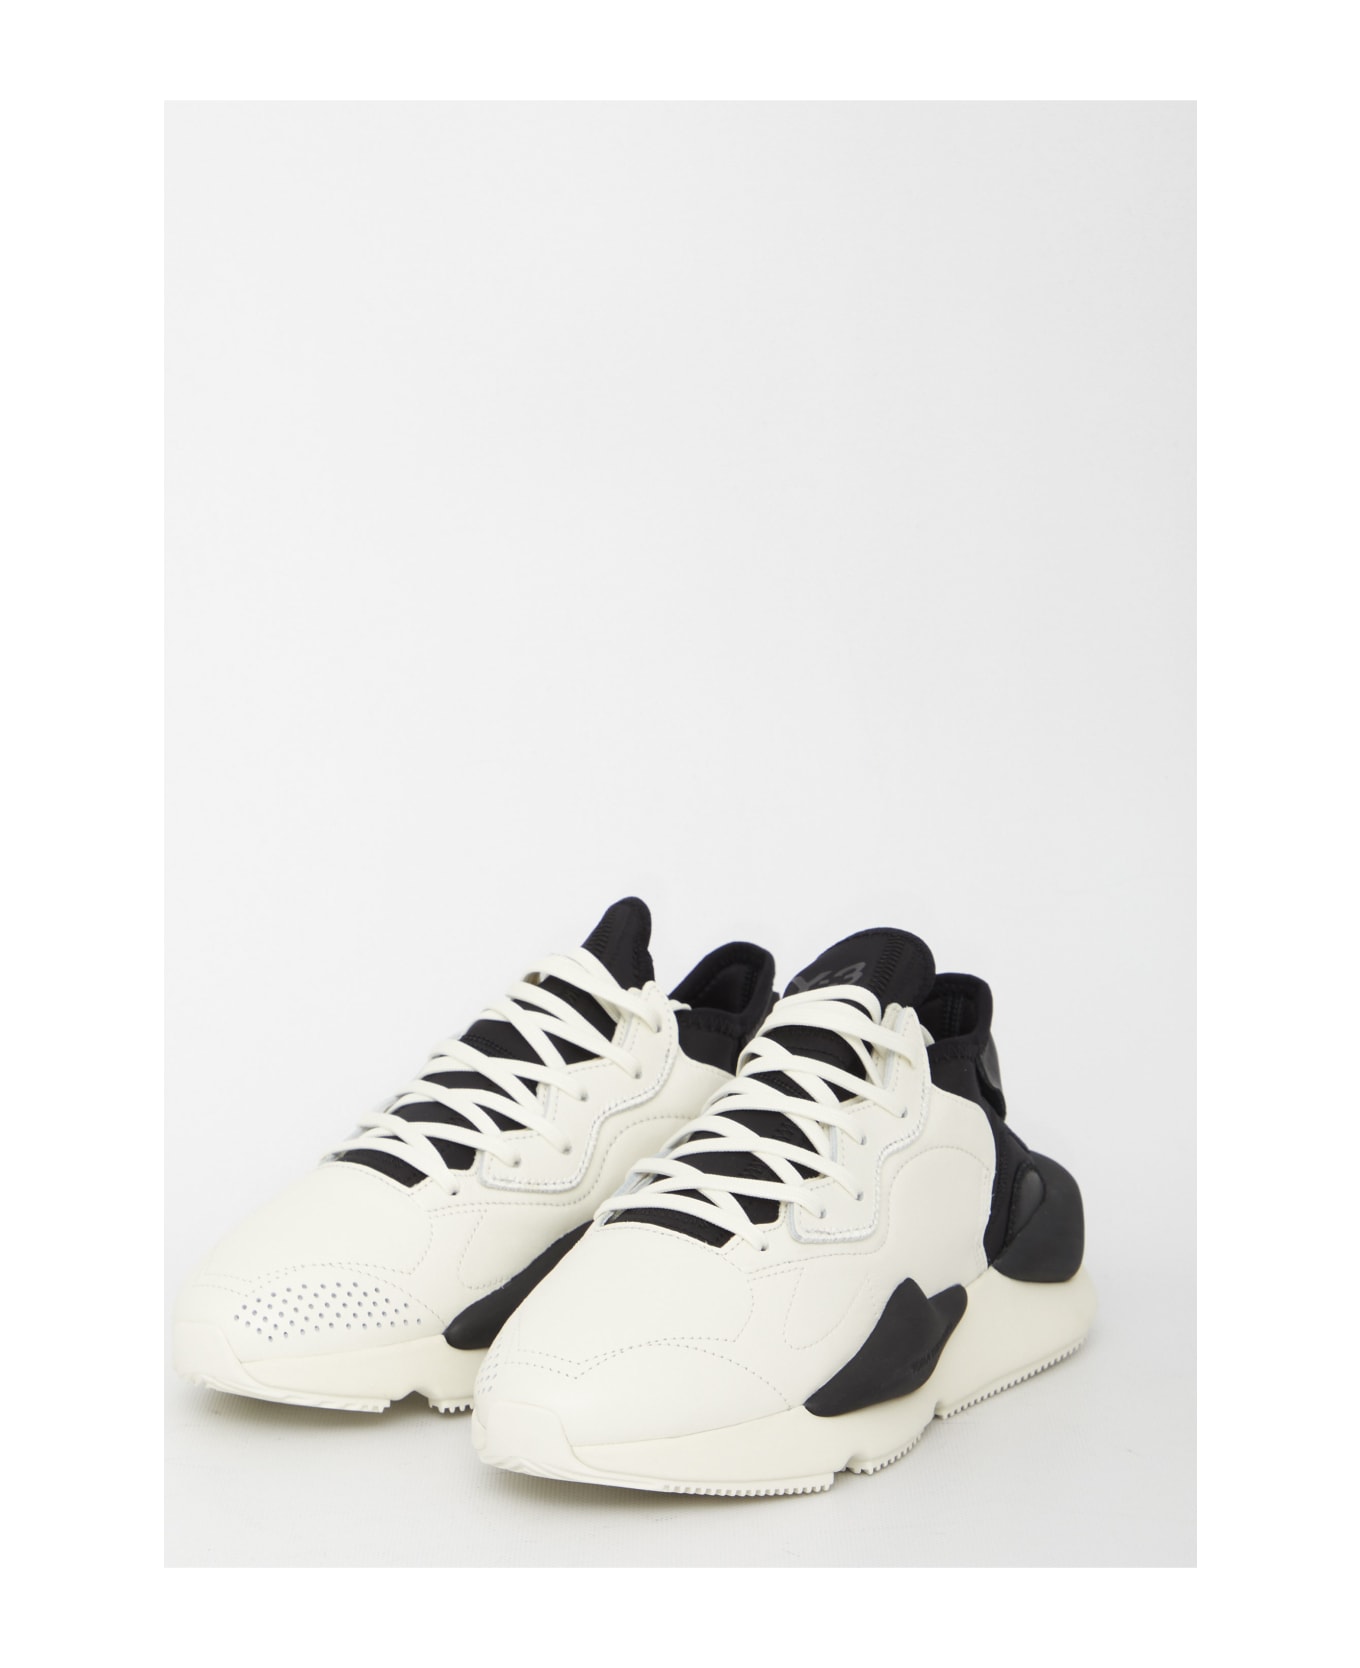 Y-3 Kaiwa Sneakers - White Black スニーカー